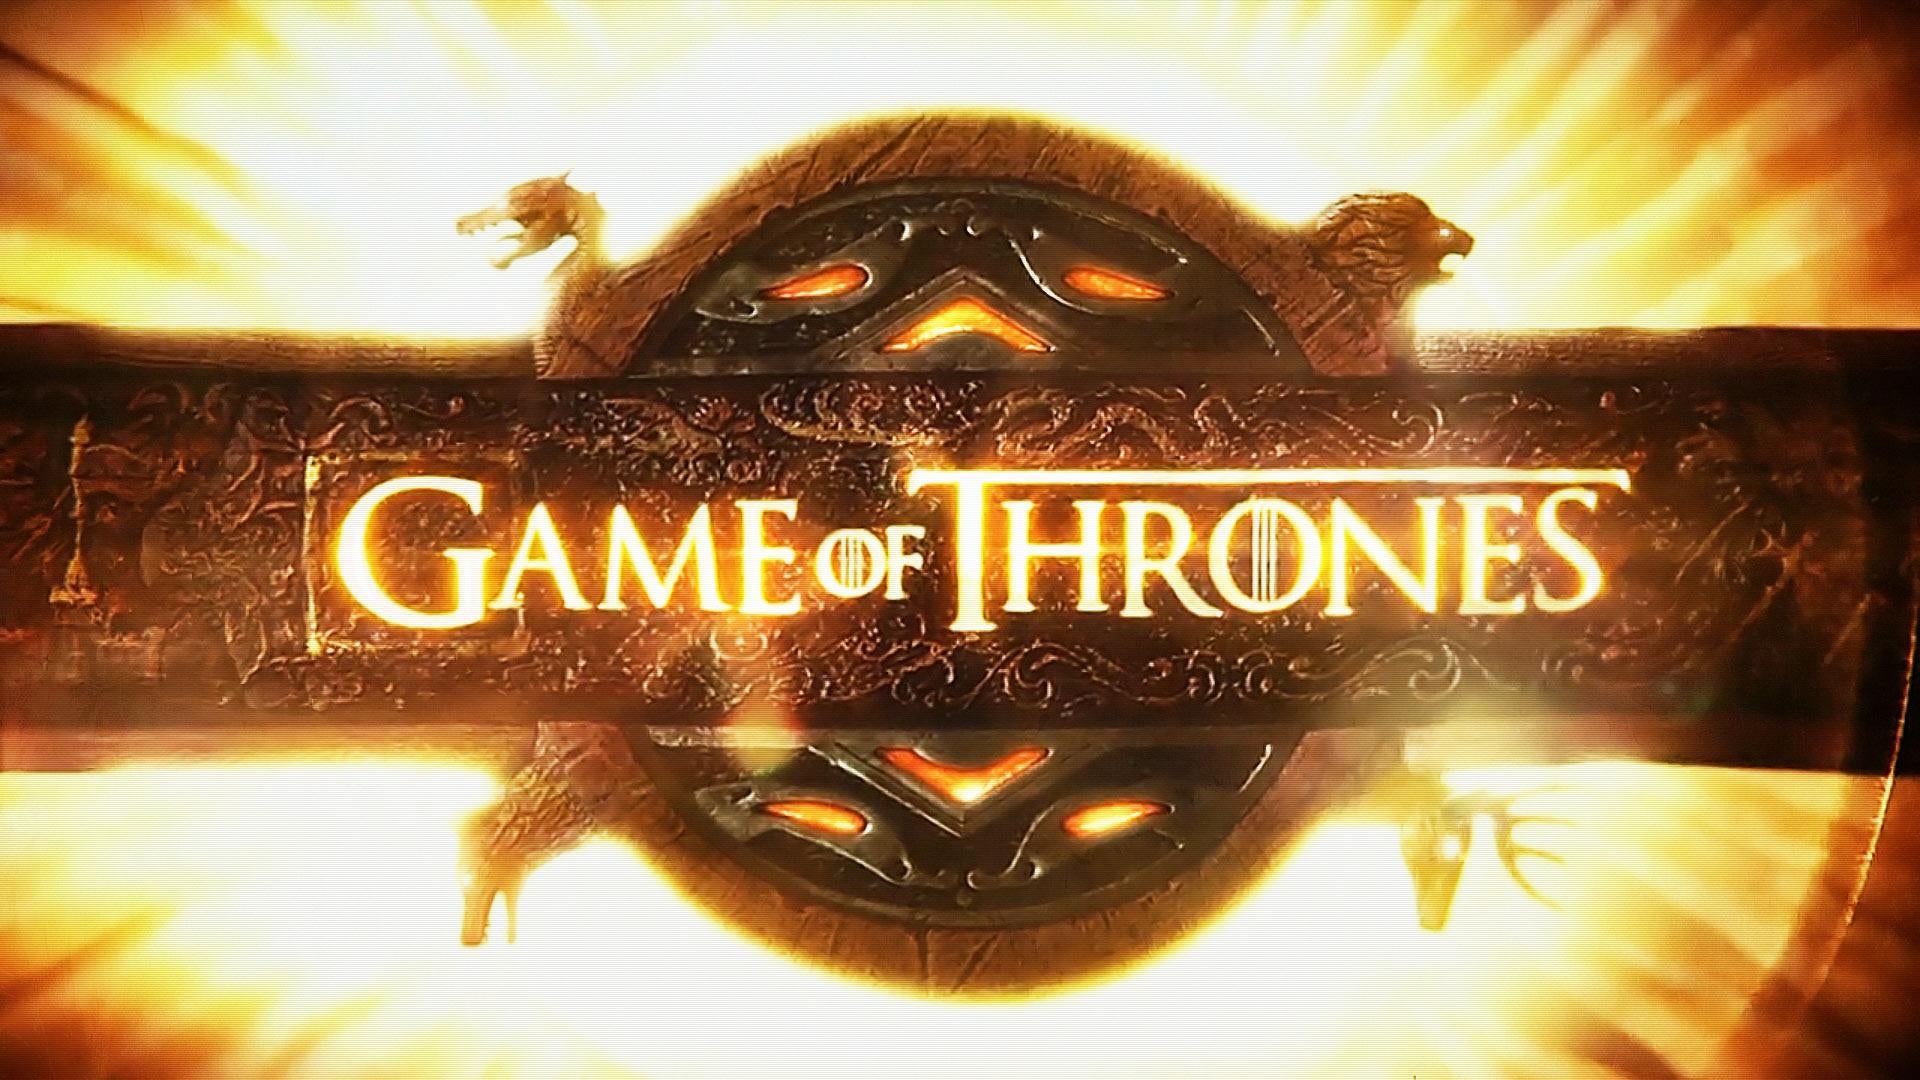 Game of thrones season 7 episode 1 download quora